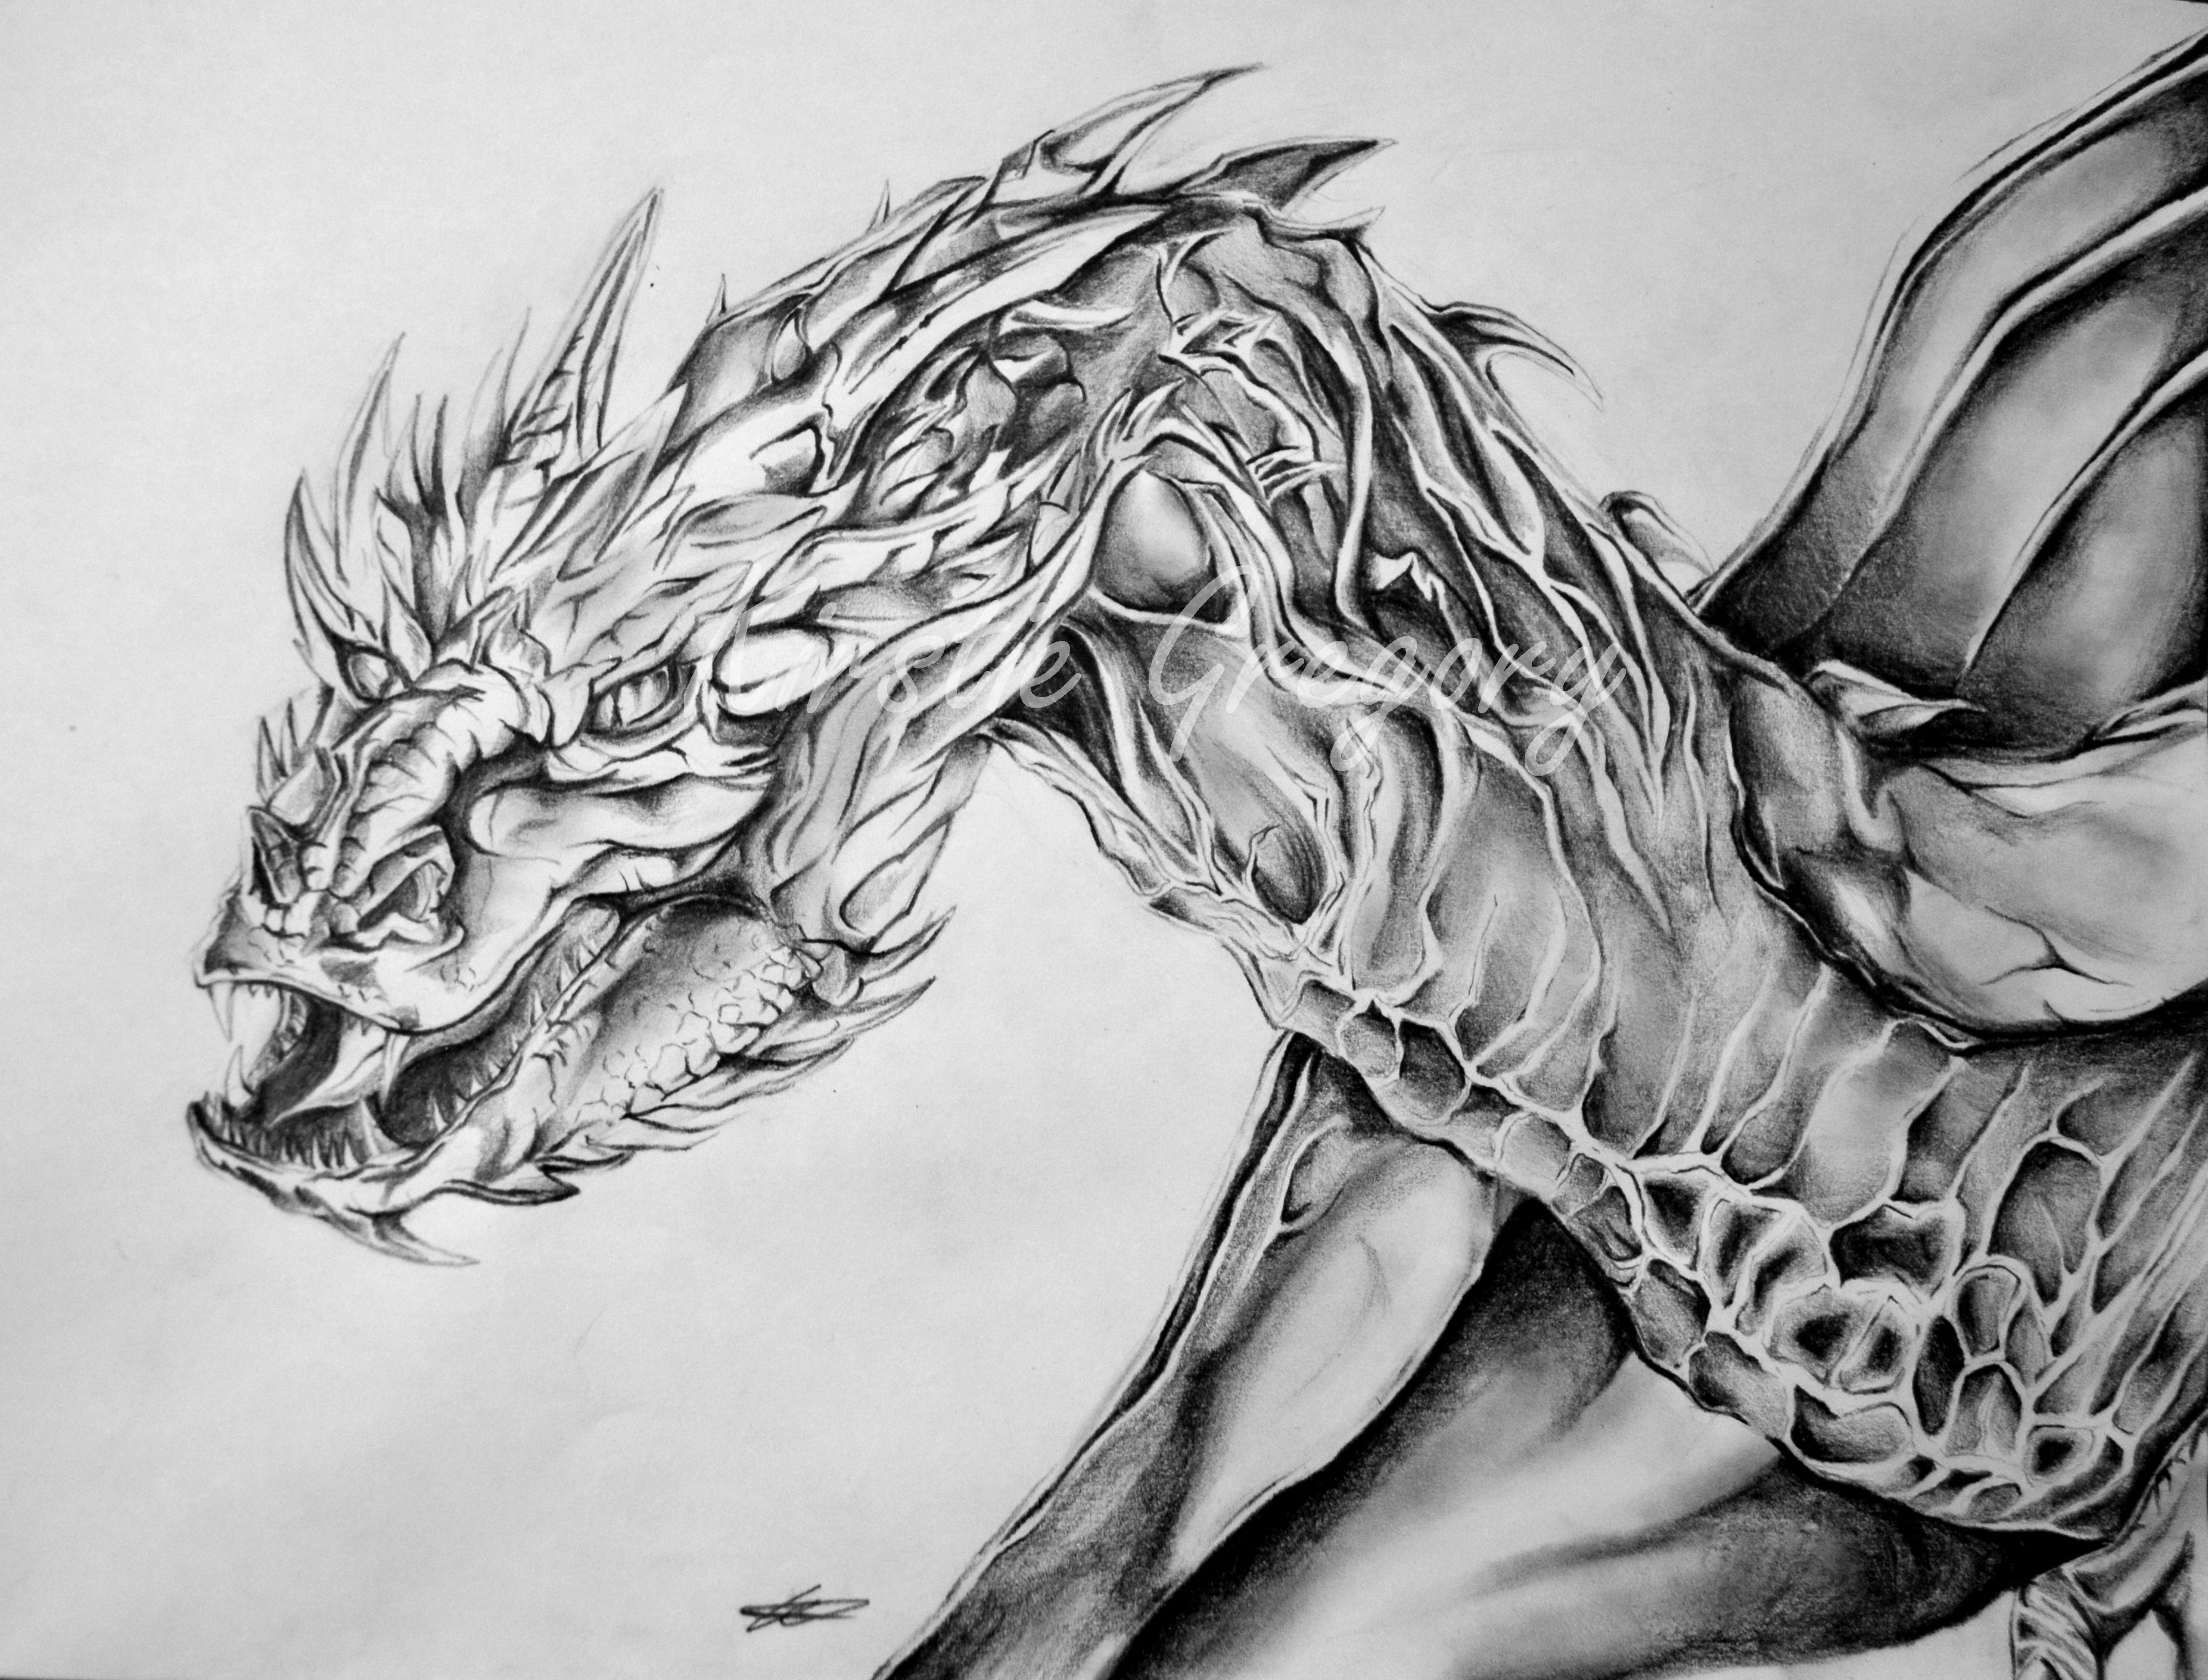 How To Draw Smaug The Dragon